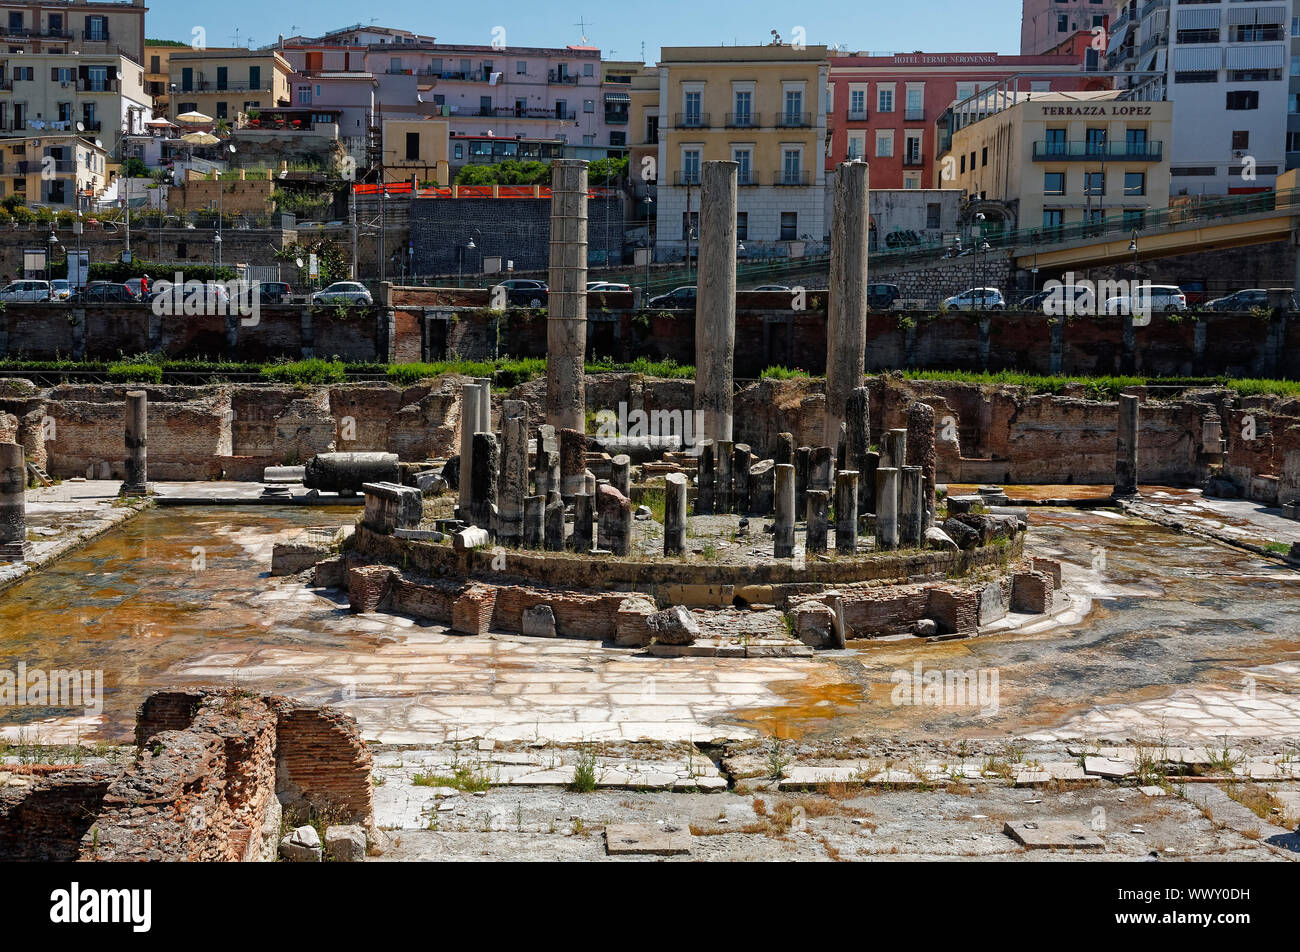 Macellum di Pozzuoli; Tempi di Serepide; market; columns measure height of sea level; 1st century; old ruins; buildings, city scene, vehicles parked, Stock Photo